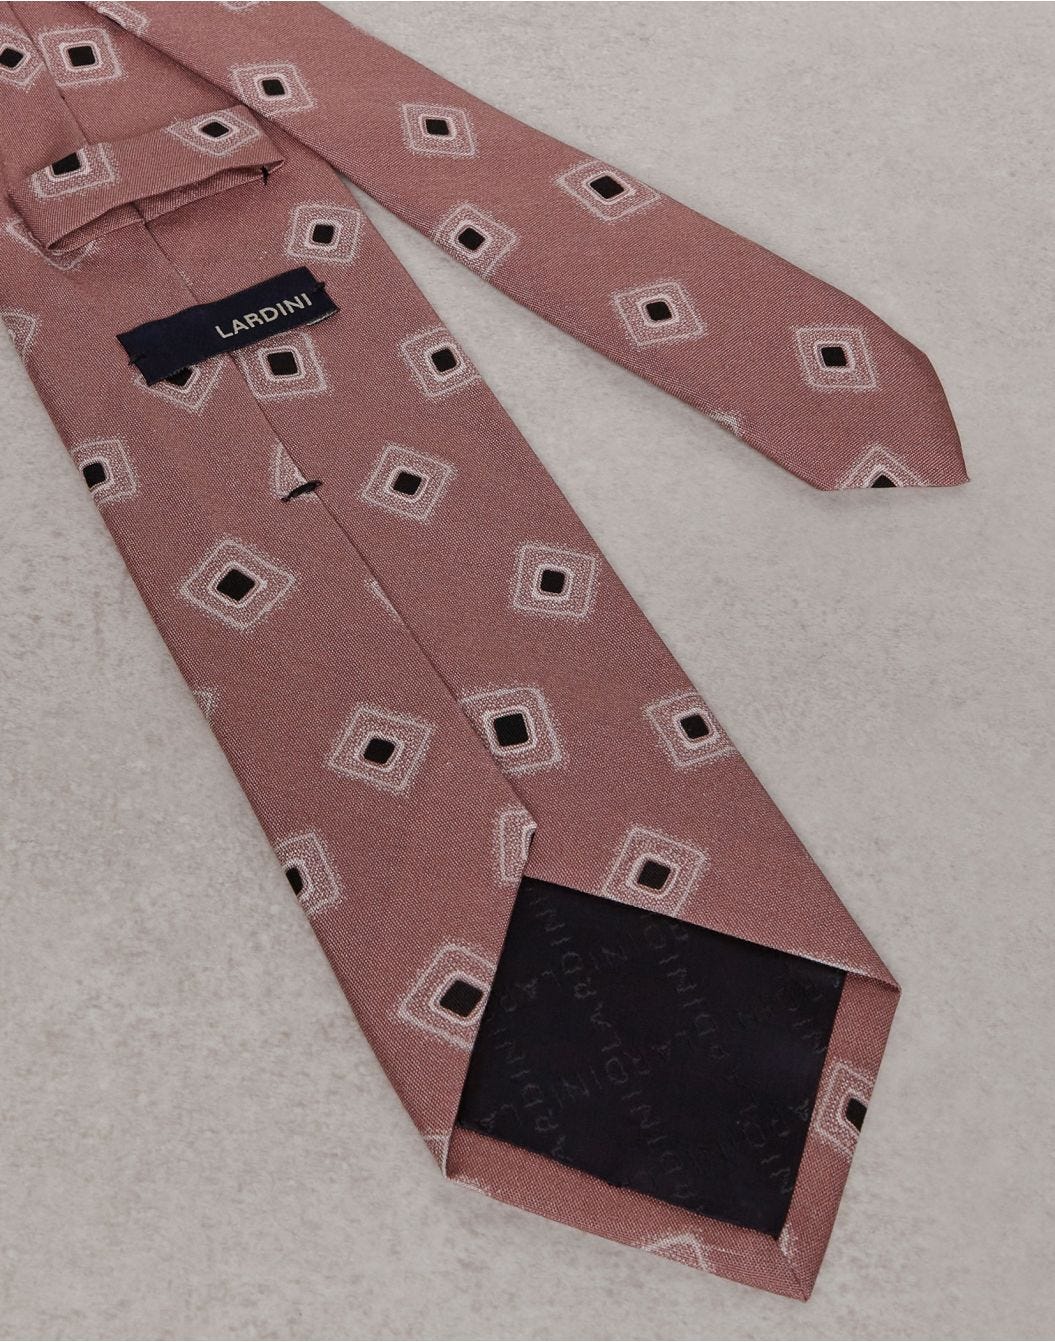 Habutai silk tie with a geometric design